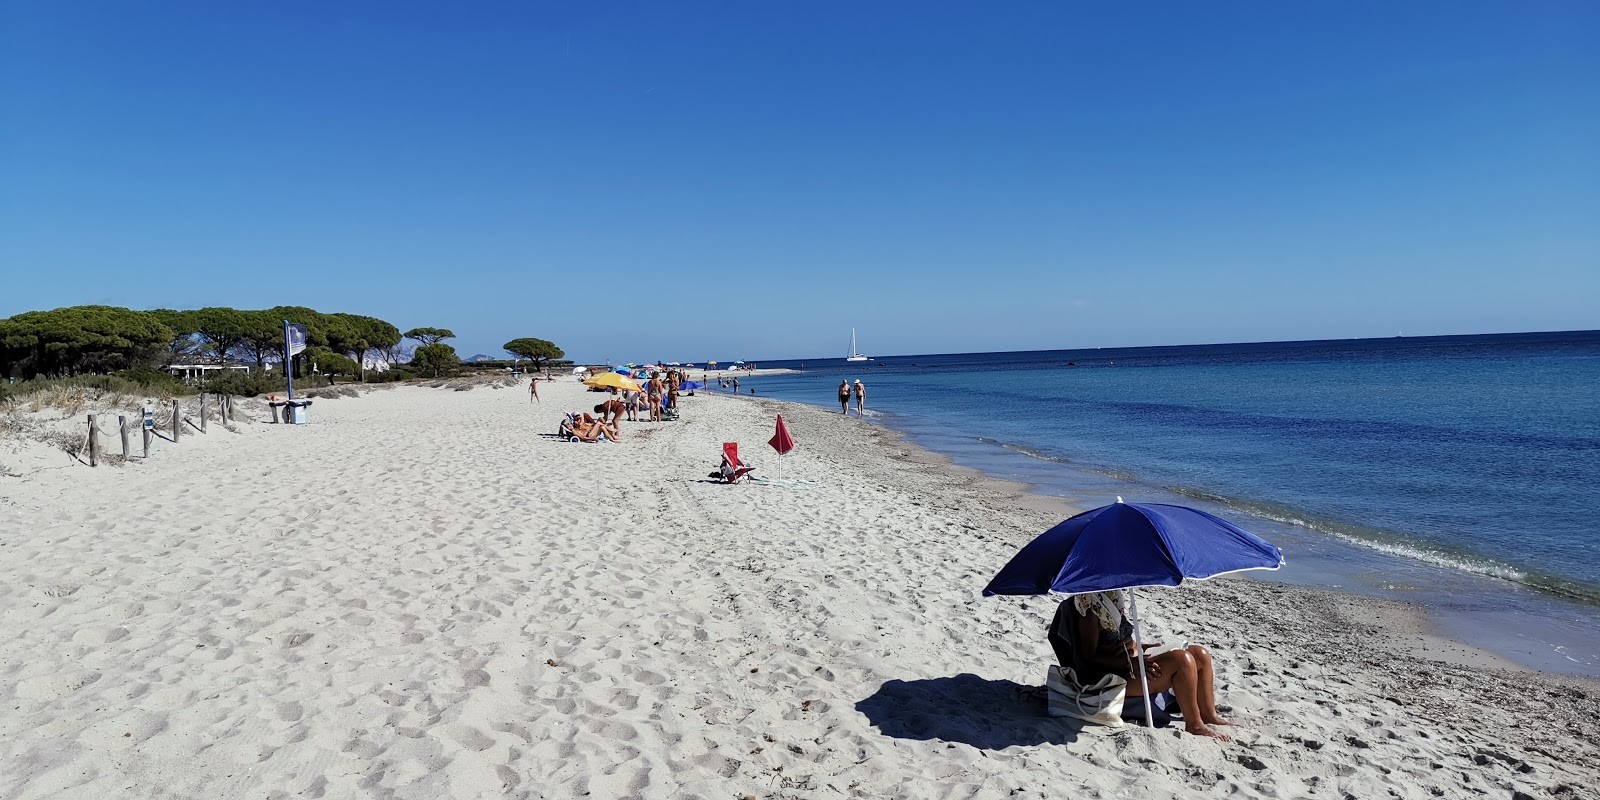 Photo of Spiaggia per Cani located in natural area